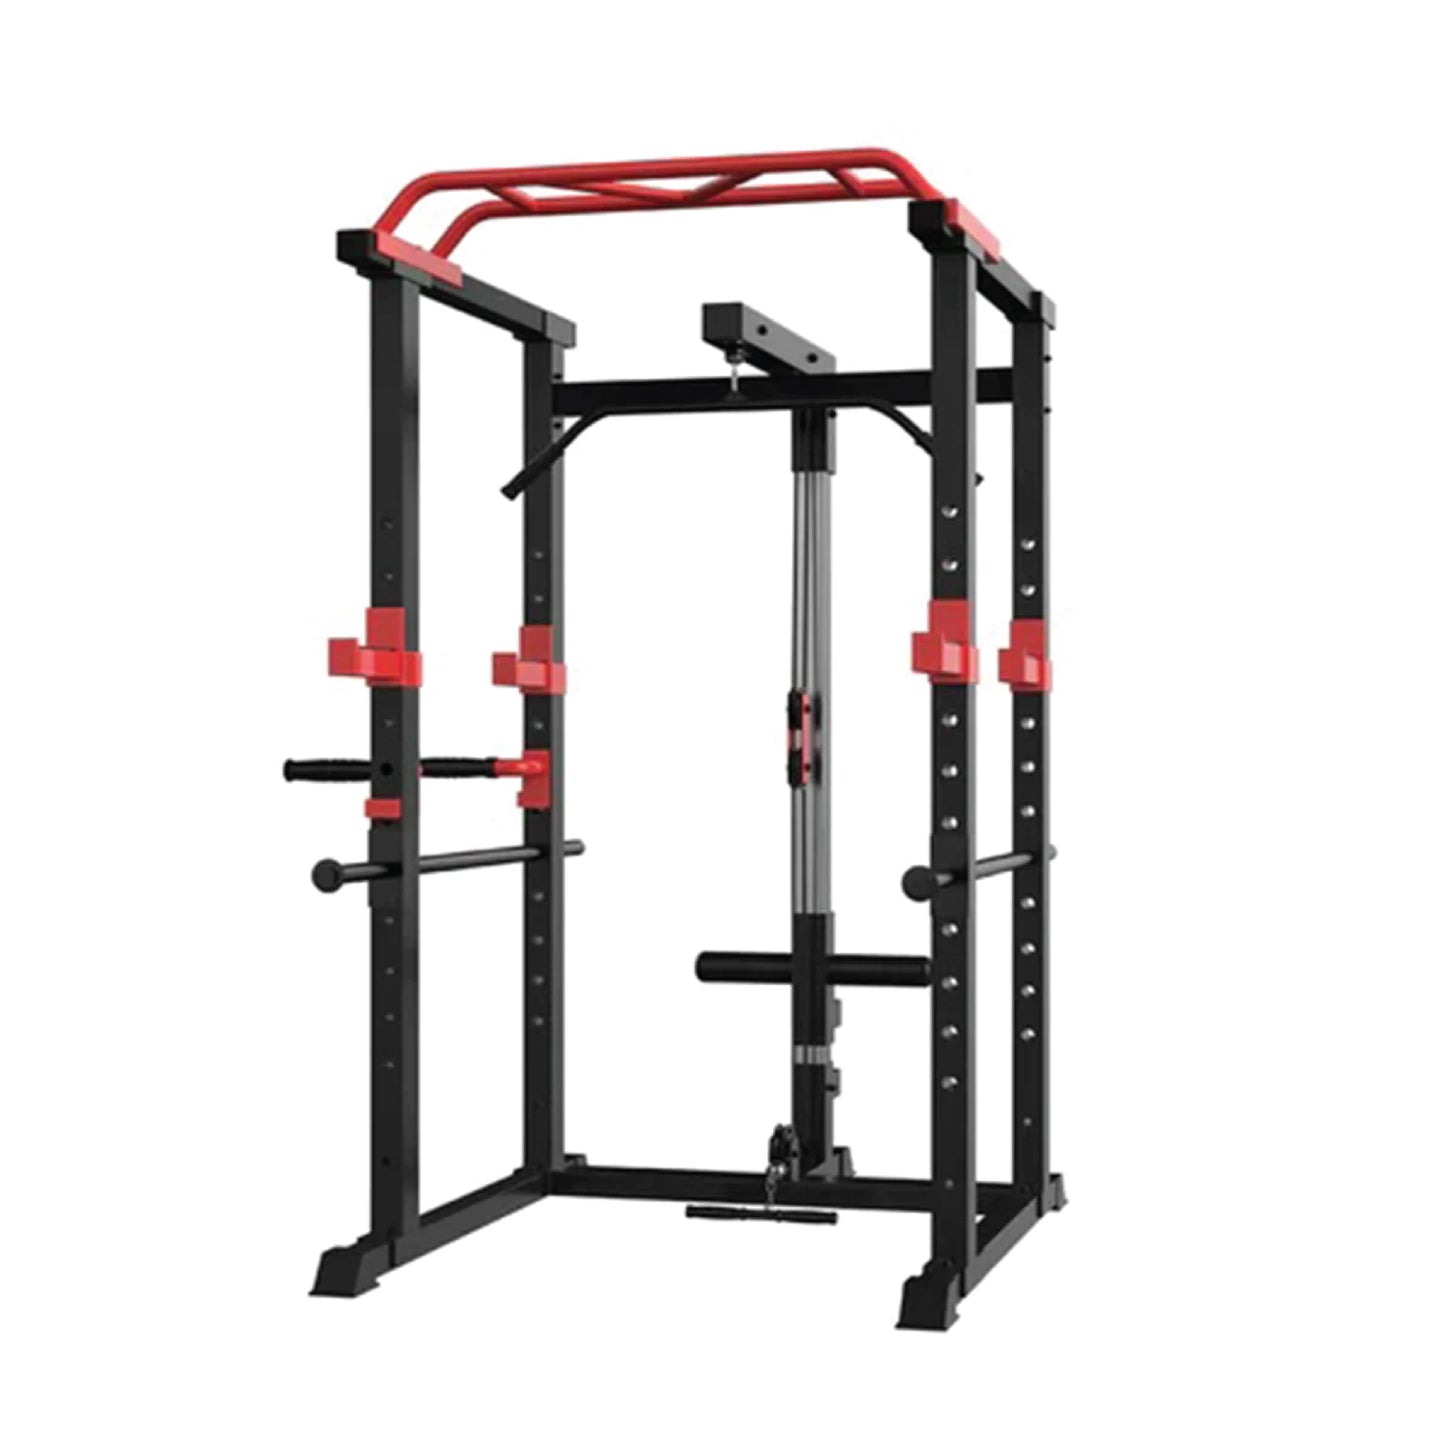 Combo Offer | Power Cage Squat Rack J008 +7 Ft Bar with Tri Grip 80 KG Set + Adjustable Bench A8007 + 4 X 15 mm Flooring